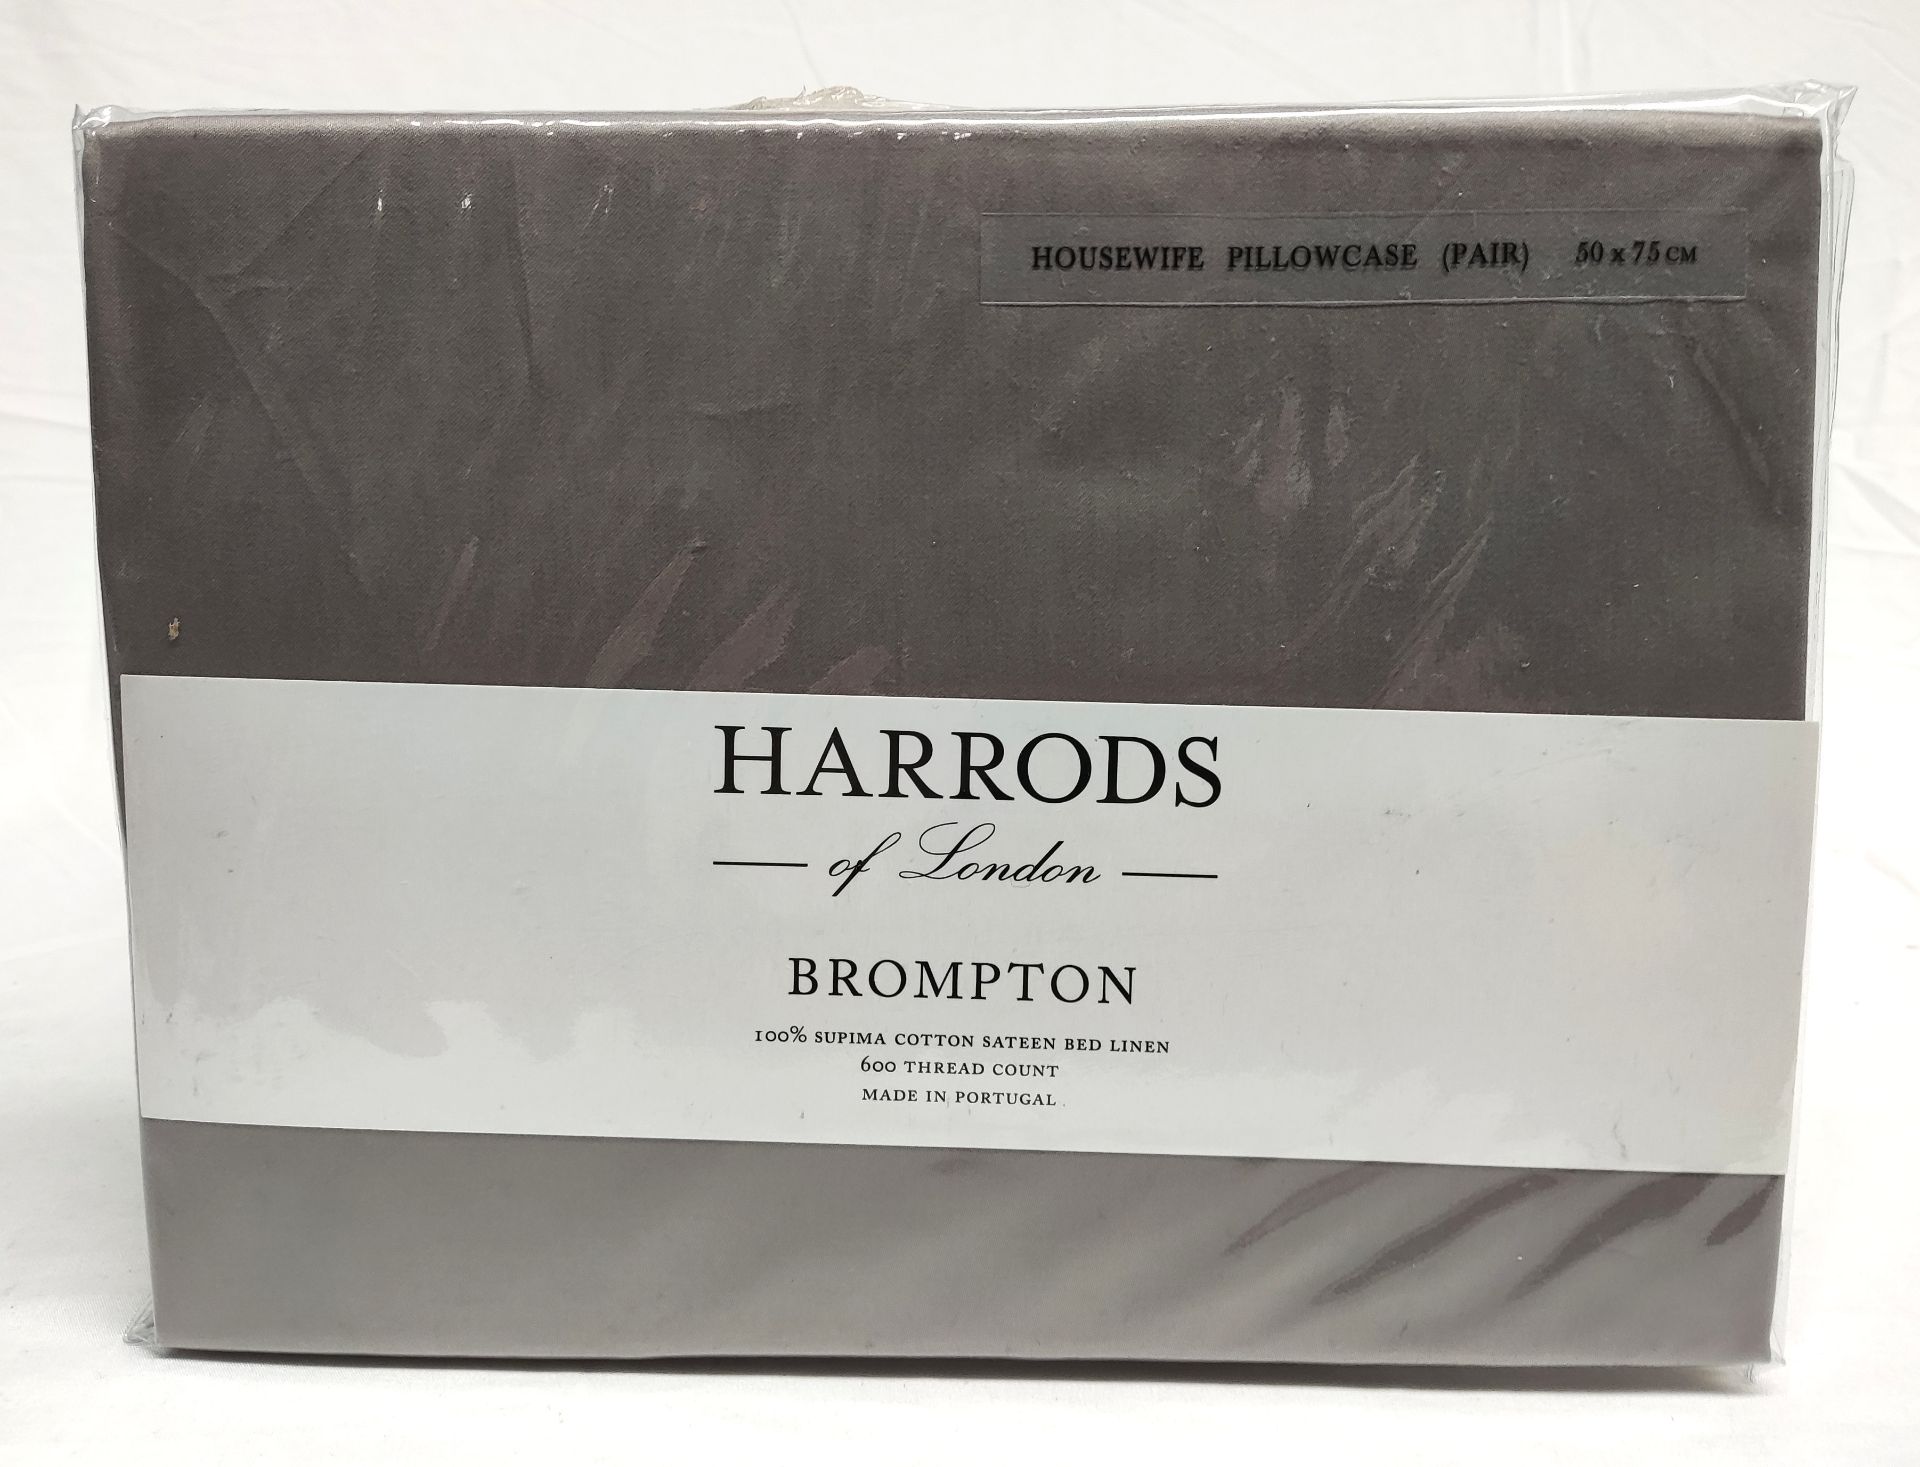 1 x HARRODS OF LONDON Brompton Housewife Pillowcase Pair (50cm X 75cm) - Original RRP £89 - Ref: - Image 5 of 9